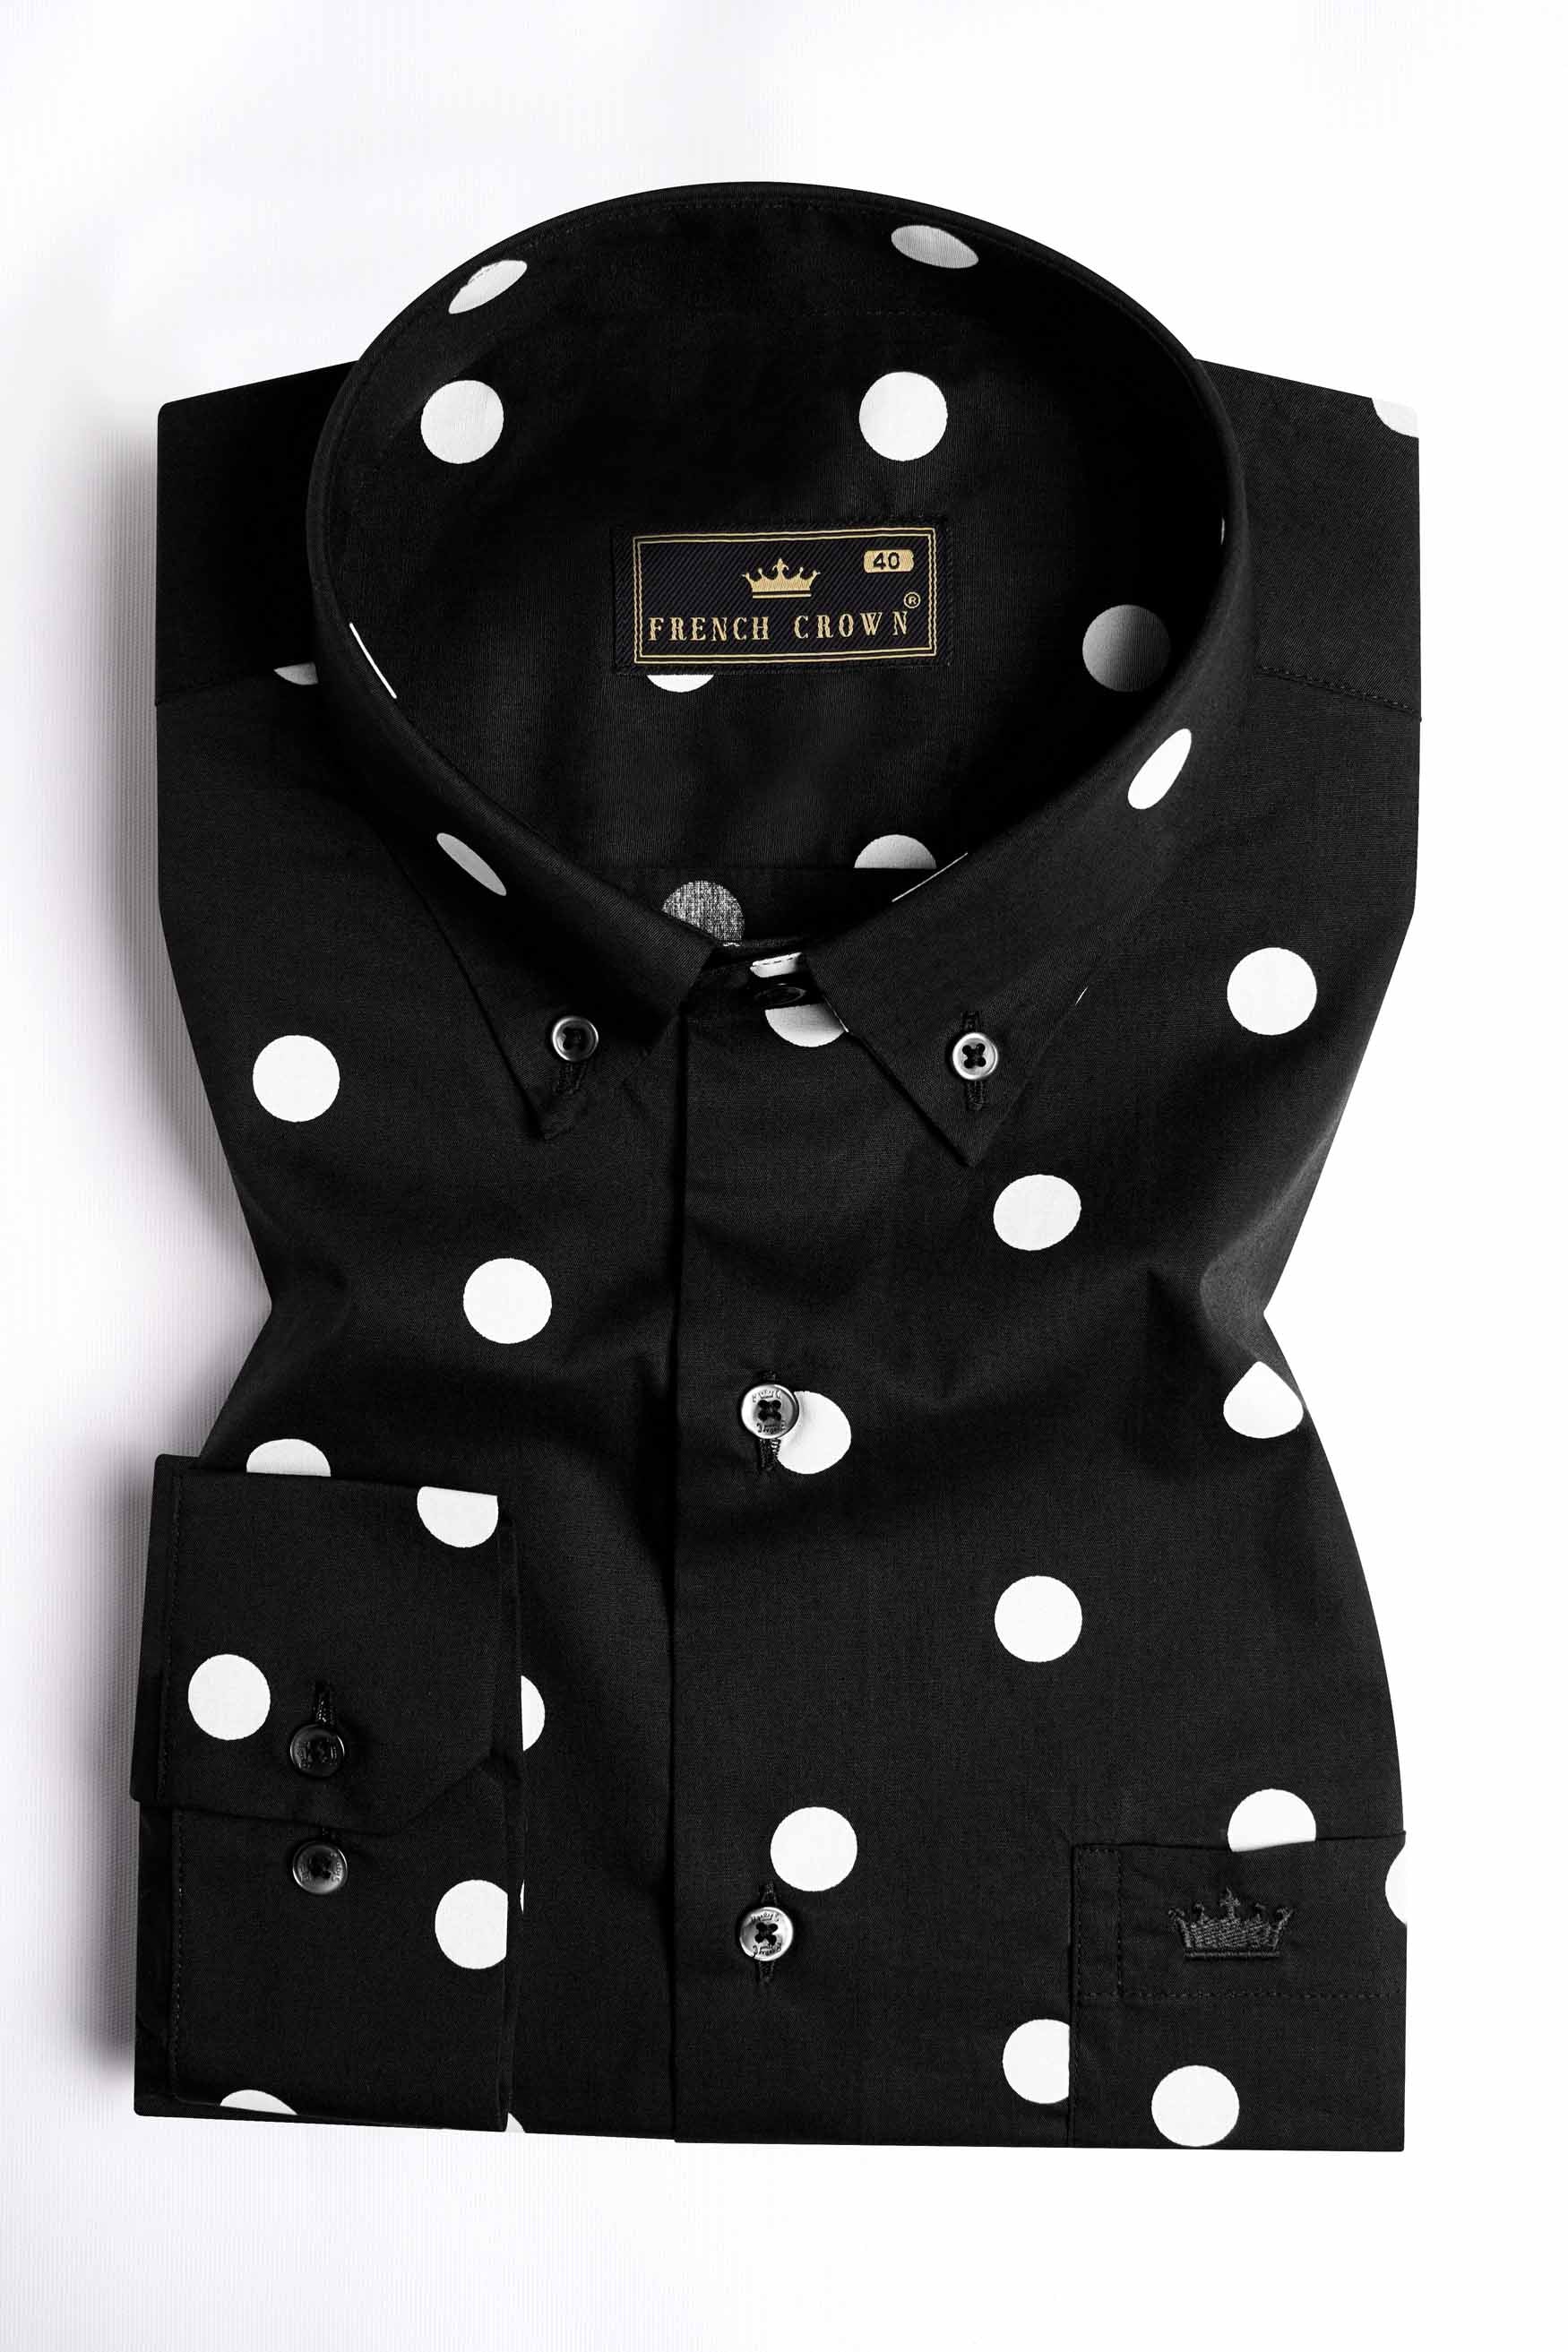 Jade Black and White Polka Dotted Premium Cotton Shirt